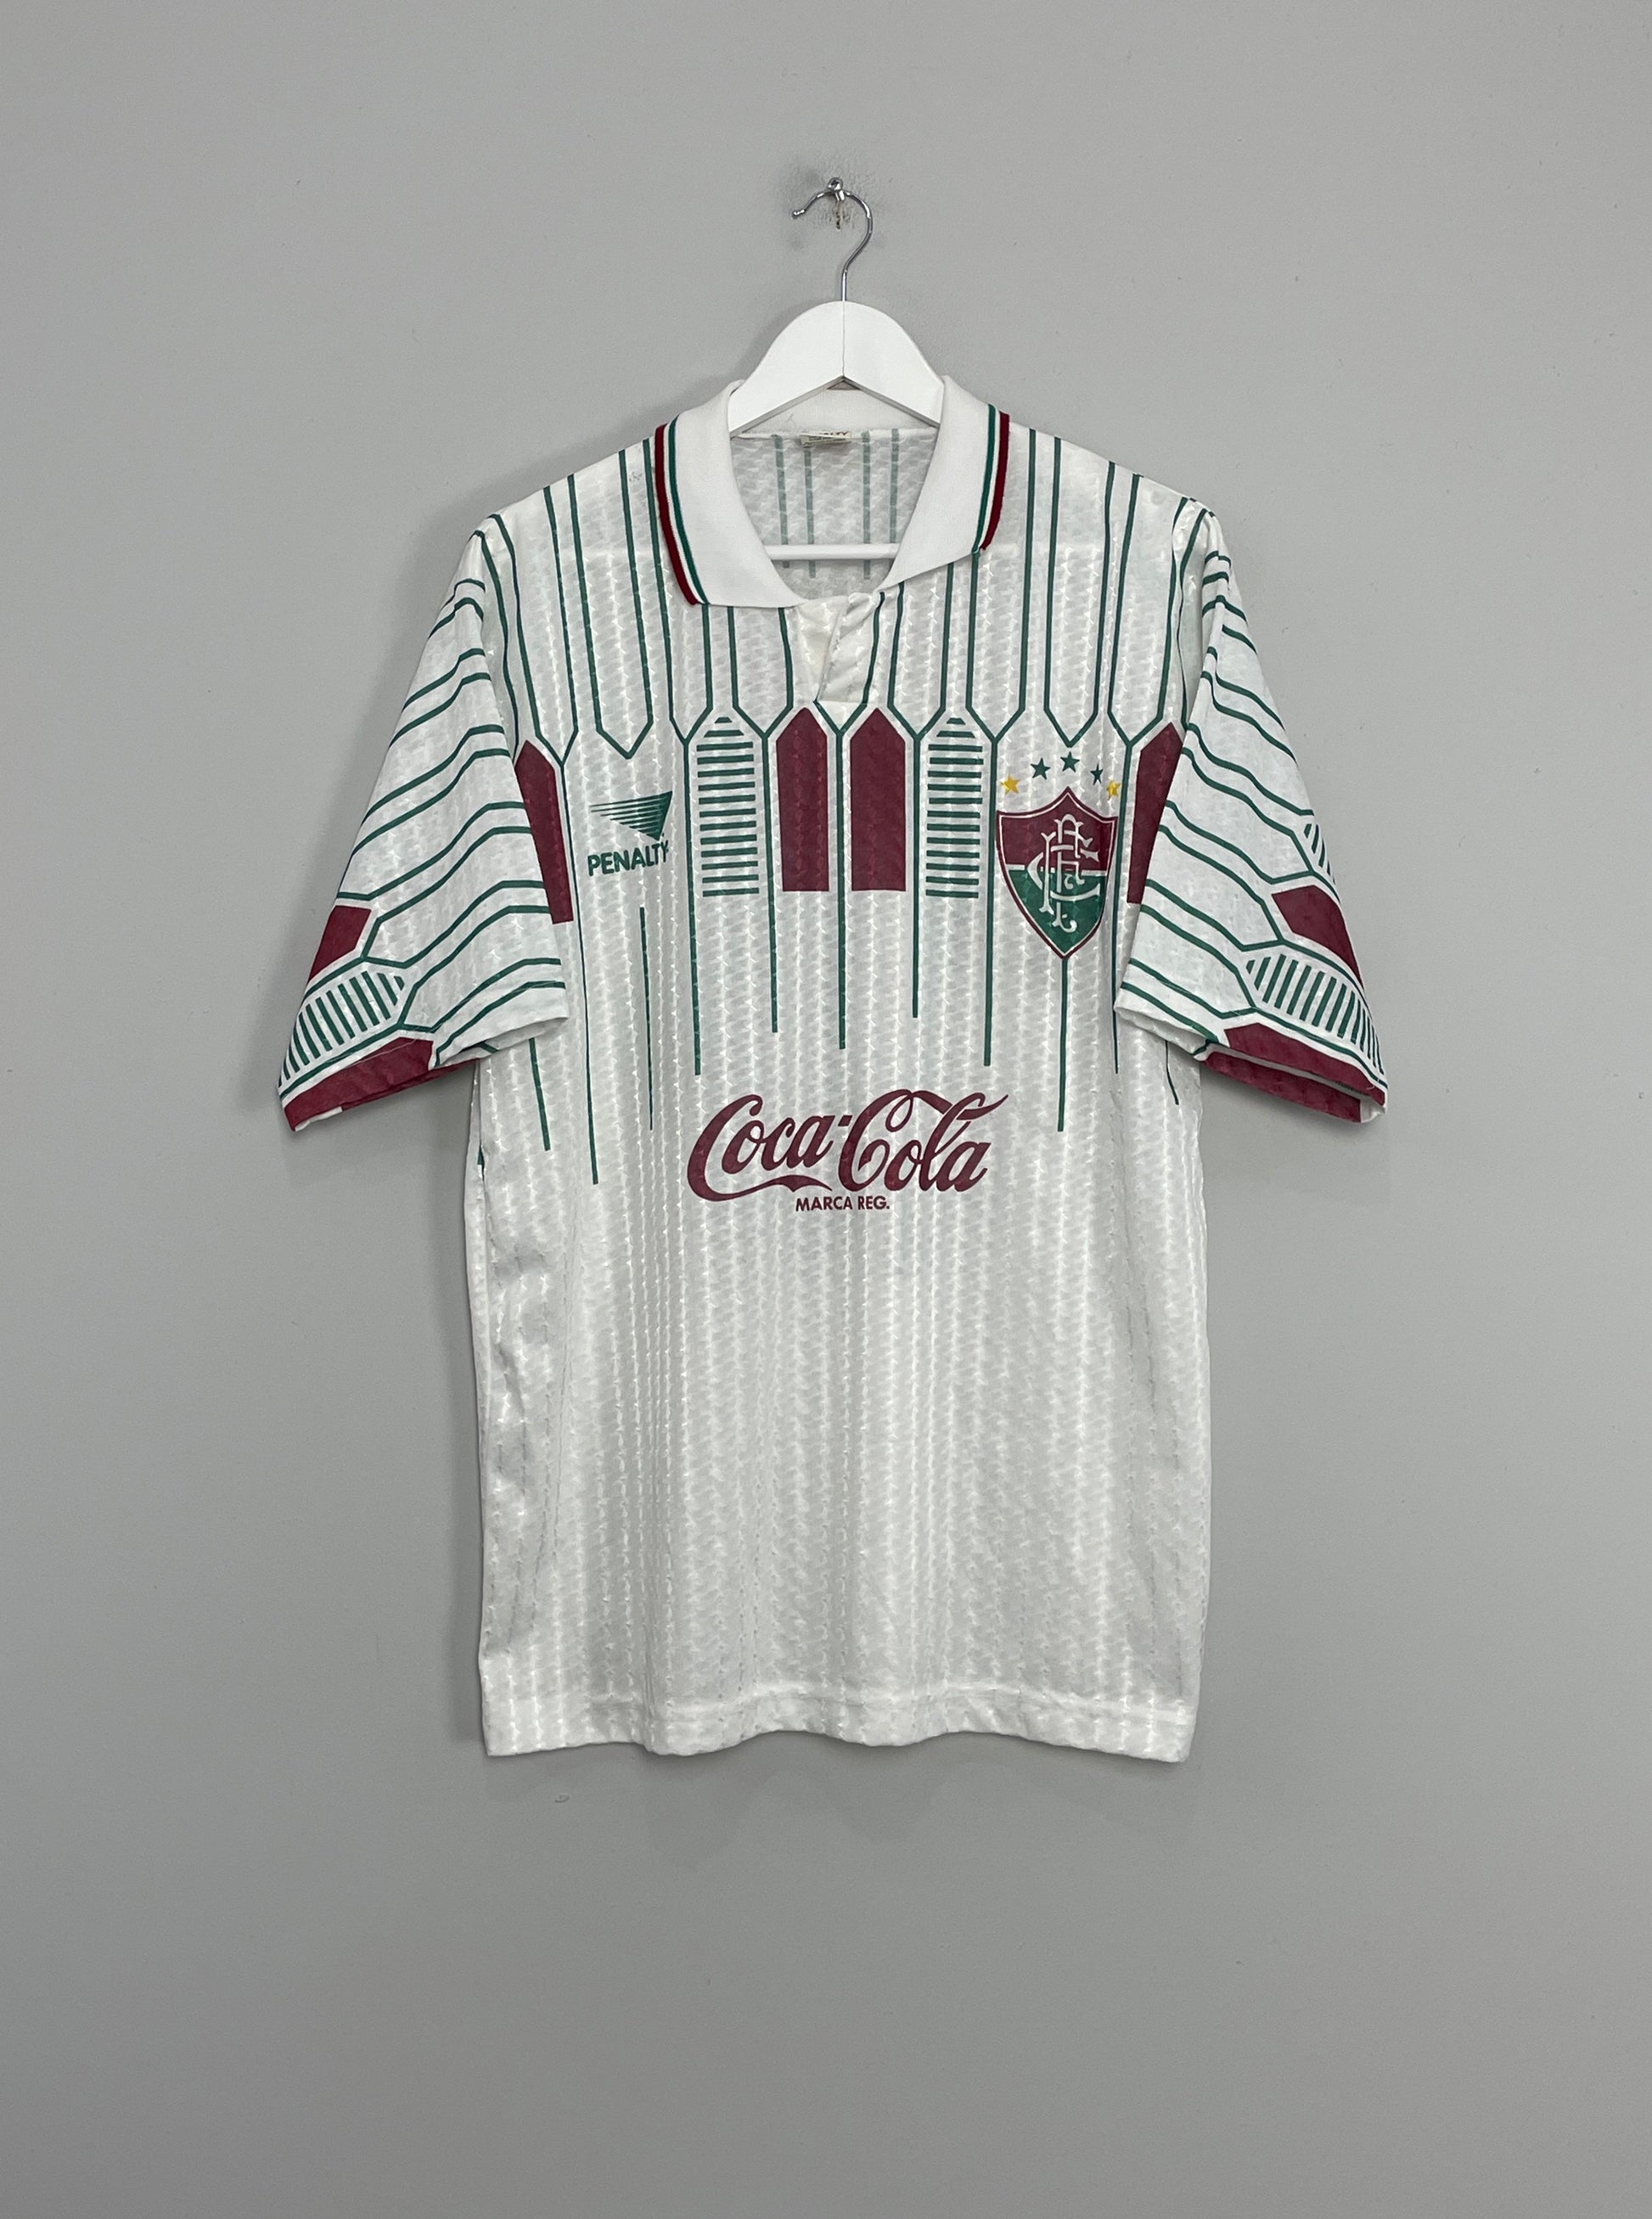 Image of the Fluminense shirt from the 1993/94 season